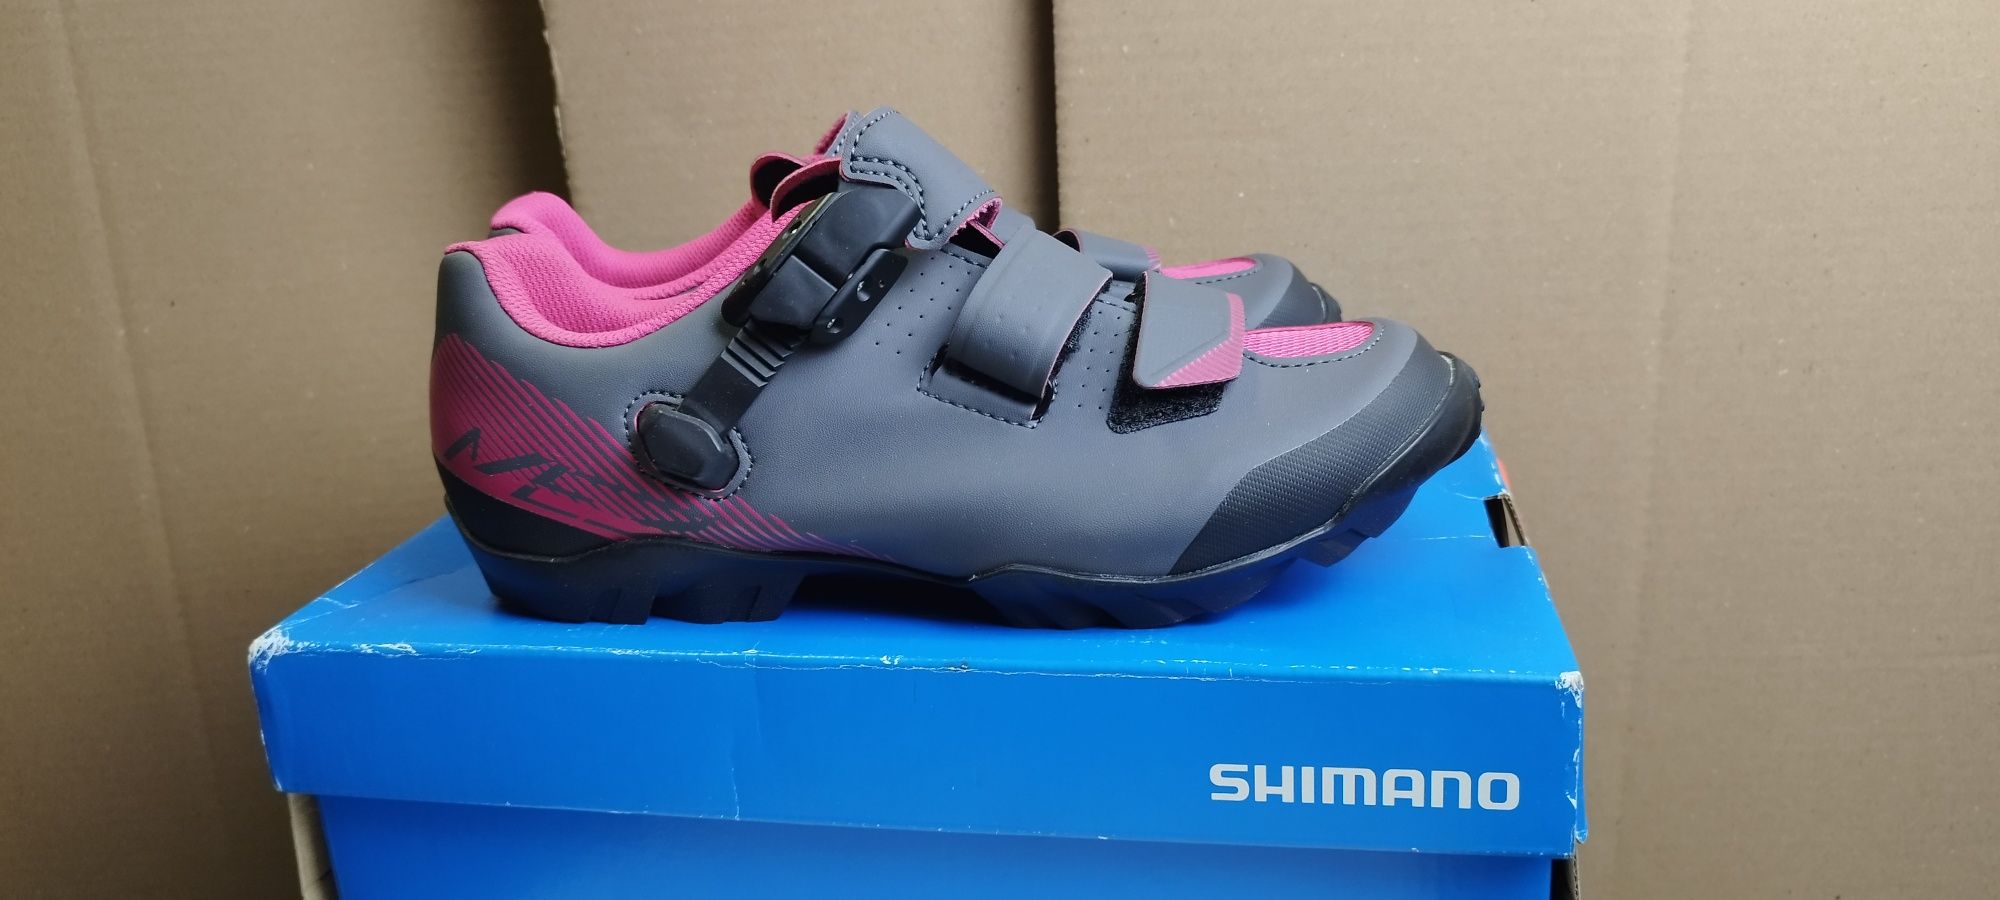 Nowe damskie buty na rower MTB Shimano ME3 r 39 (24,5cm)